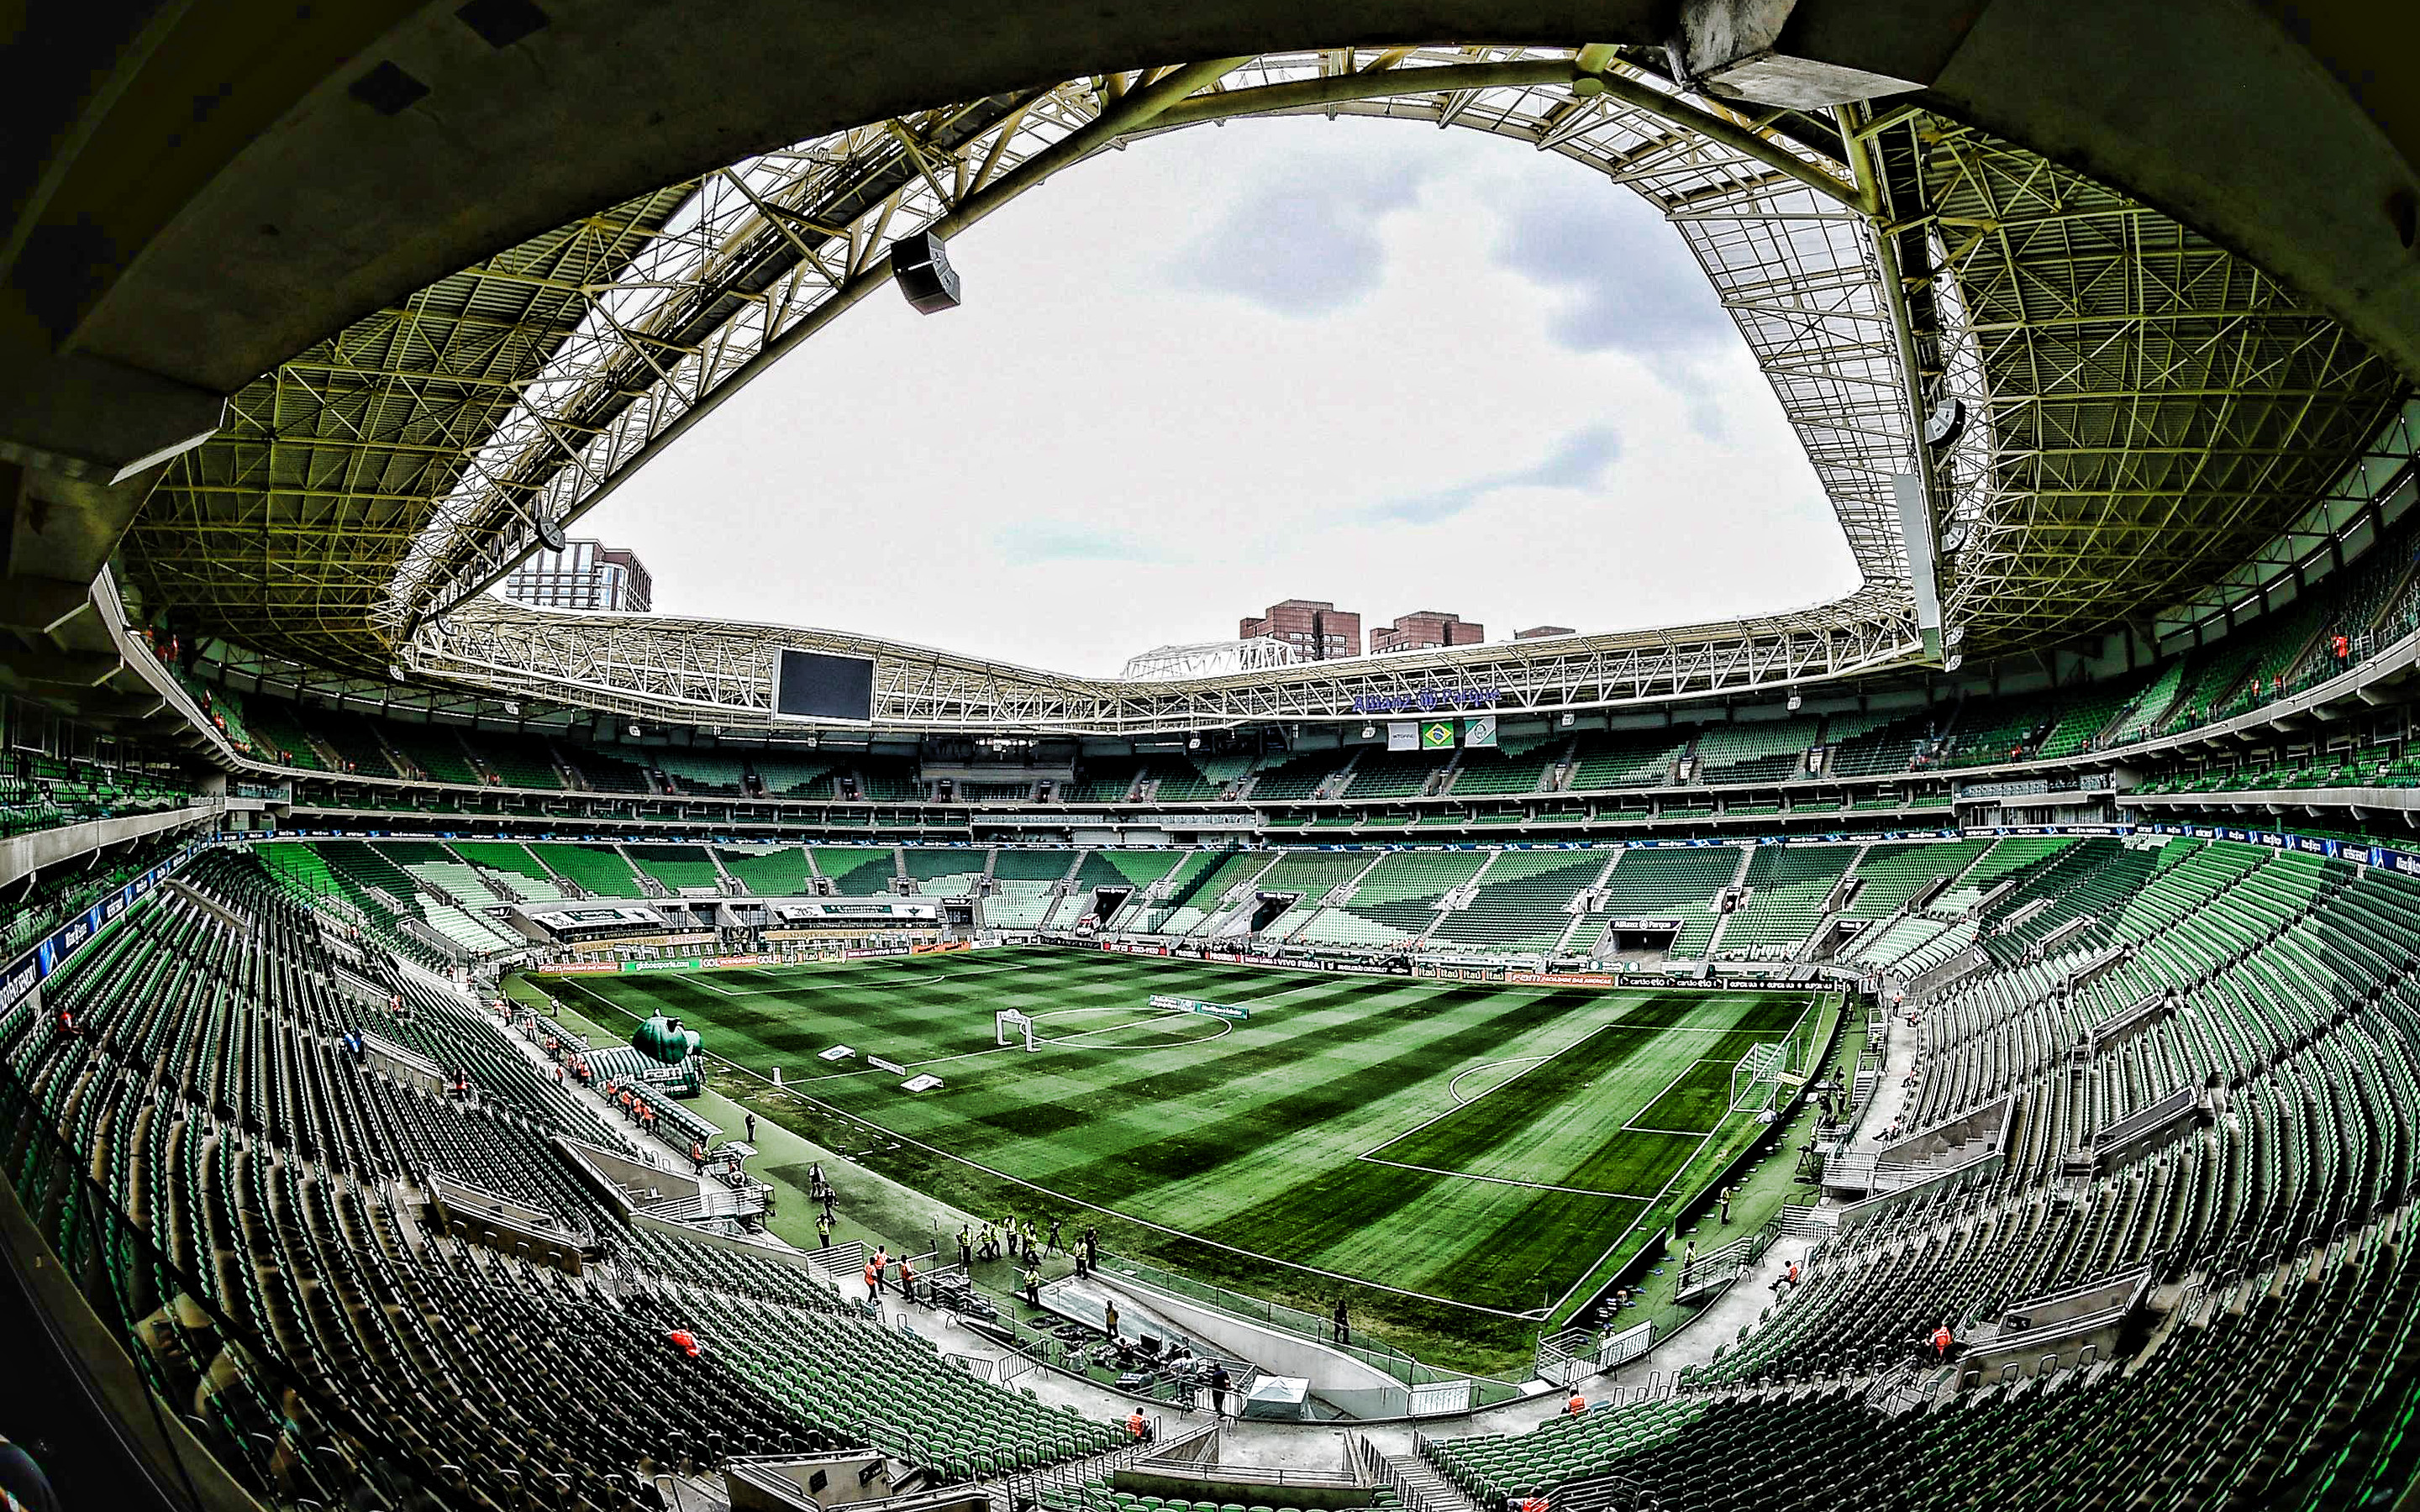 Palmeiras vs Guarani at Allianz Parque on 10/03/20 Tue 21:30 | Football